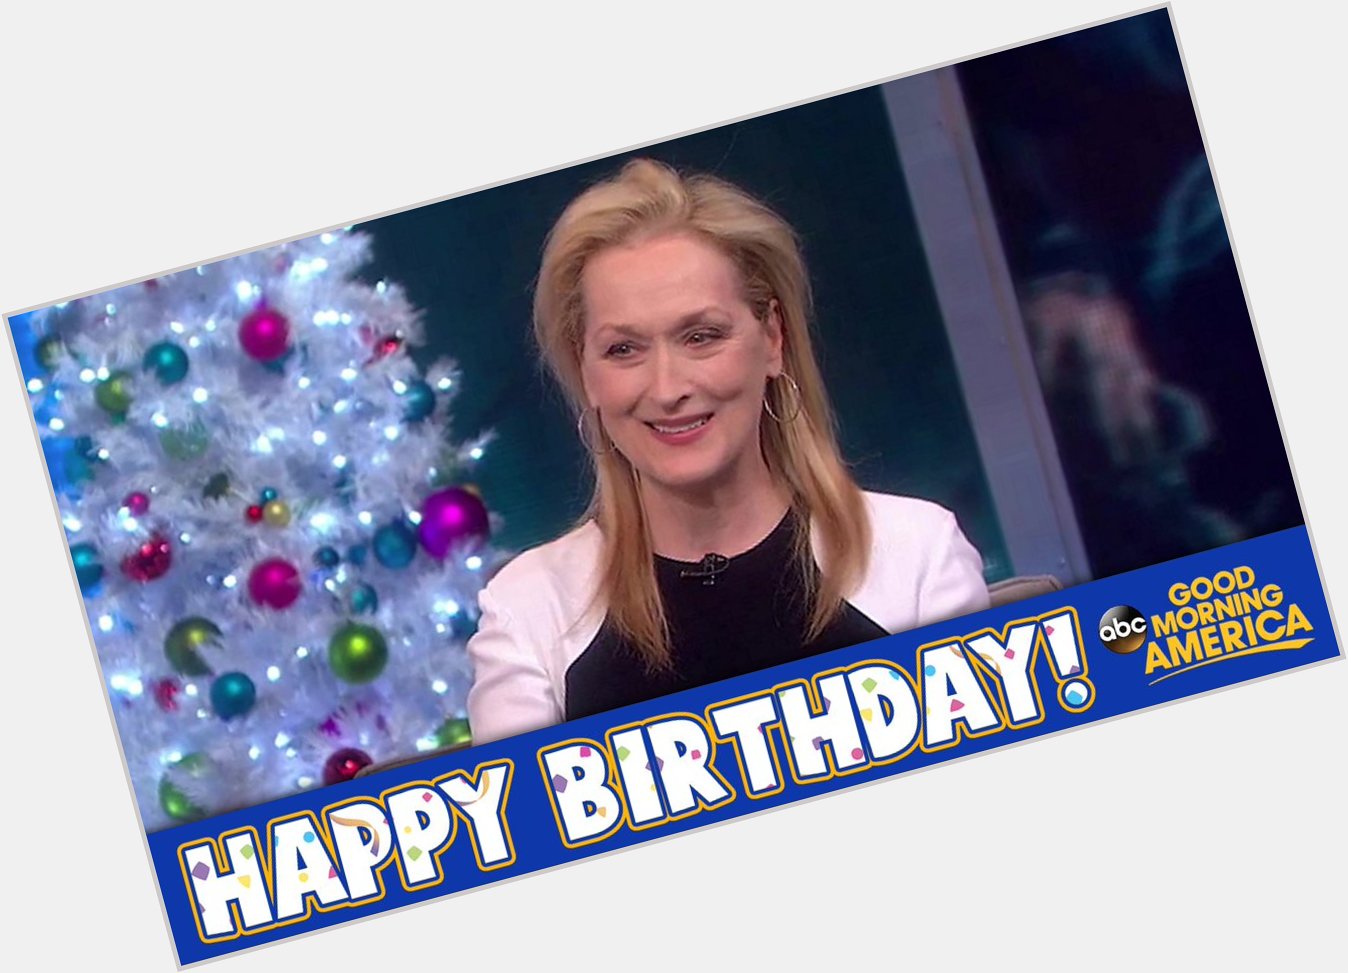 Happy Birthday to Award winner Meryl Streep!  